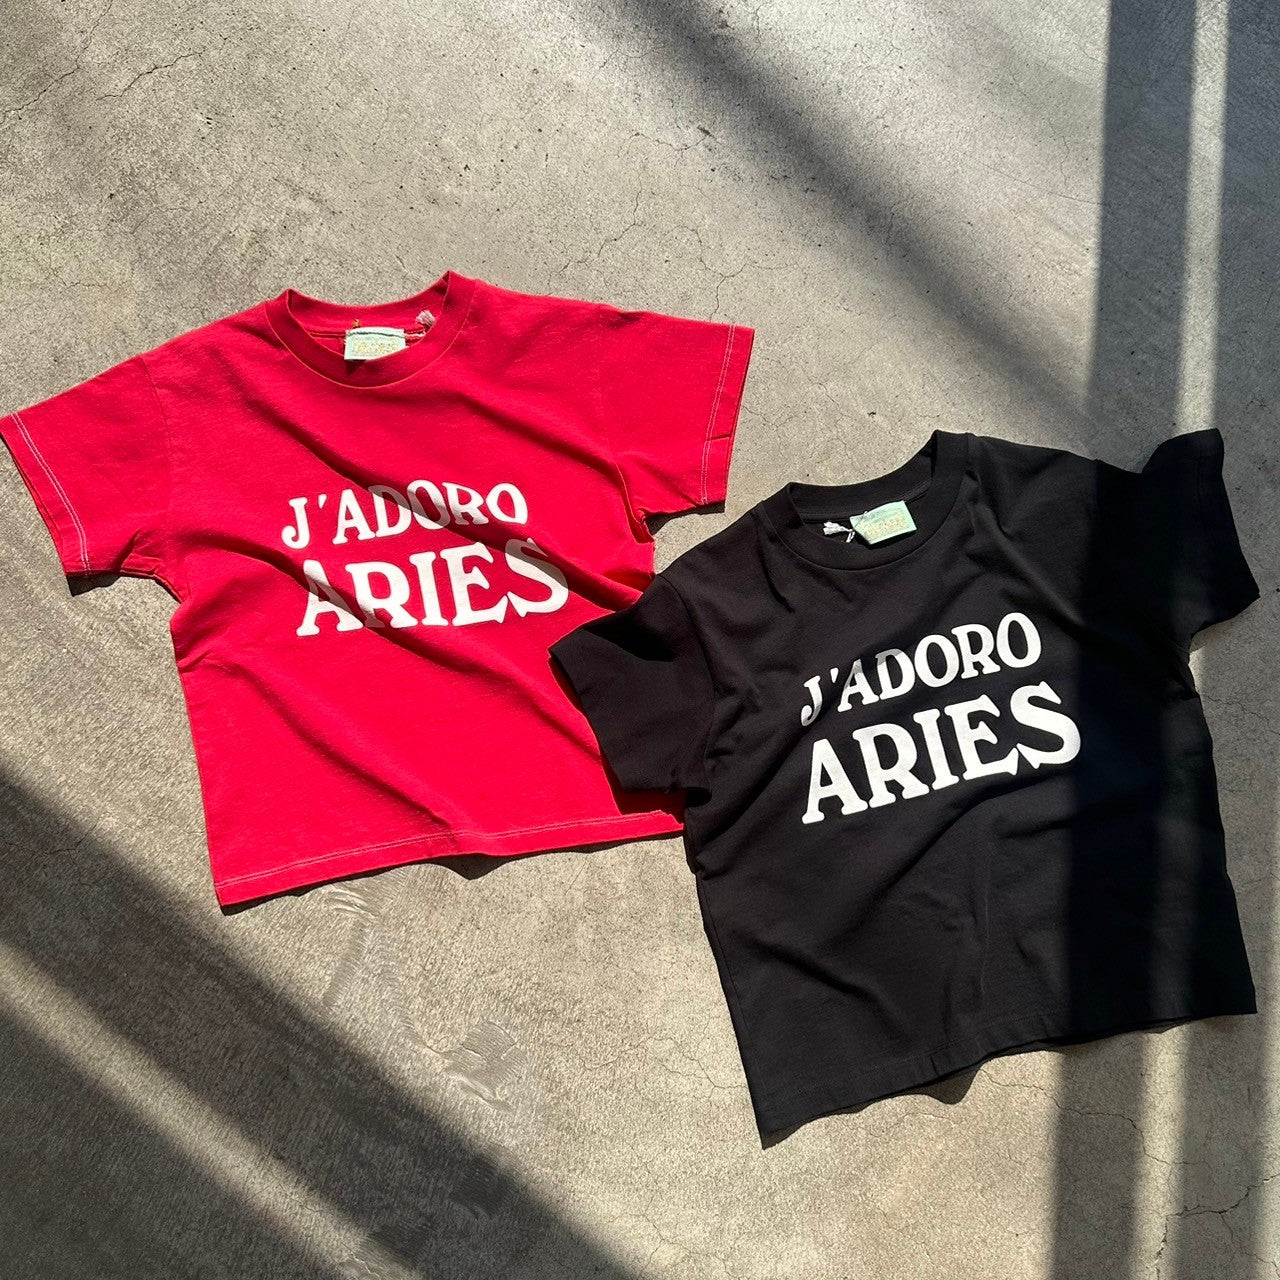 Aries (アリーズ) の商品一覧 | スニーカー・ファッションのForget-me-nots